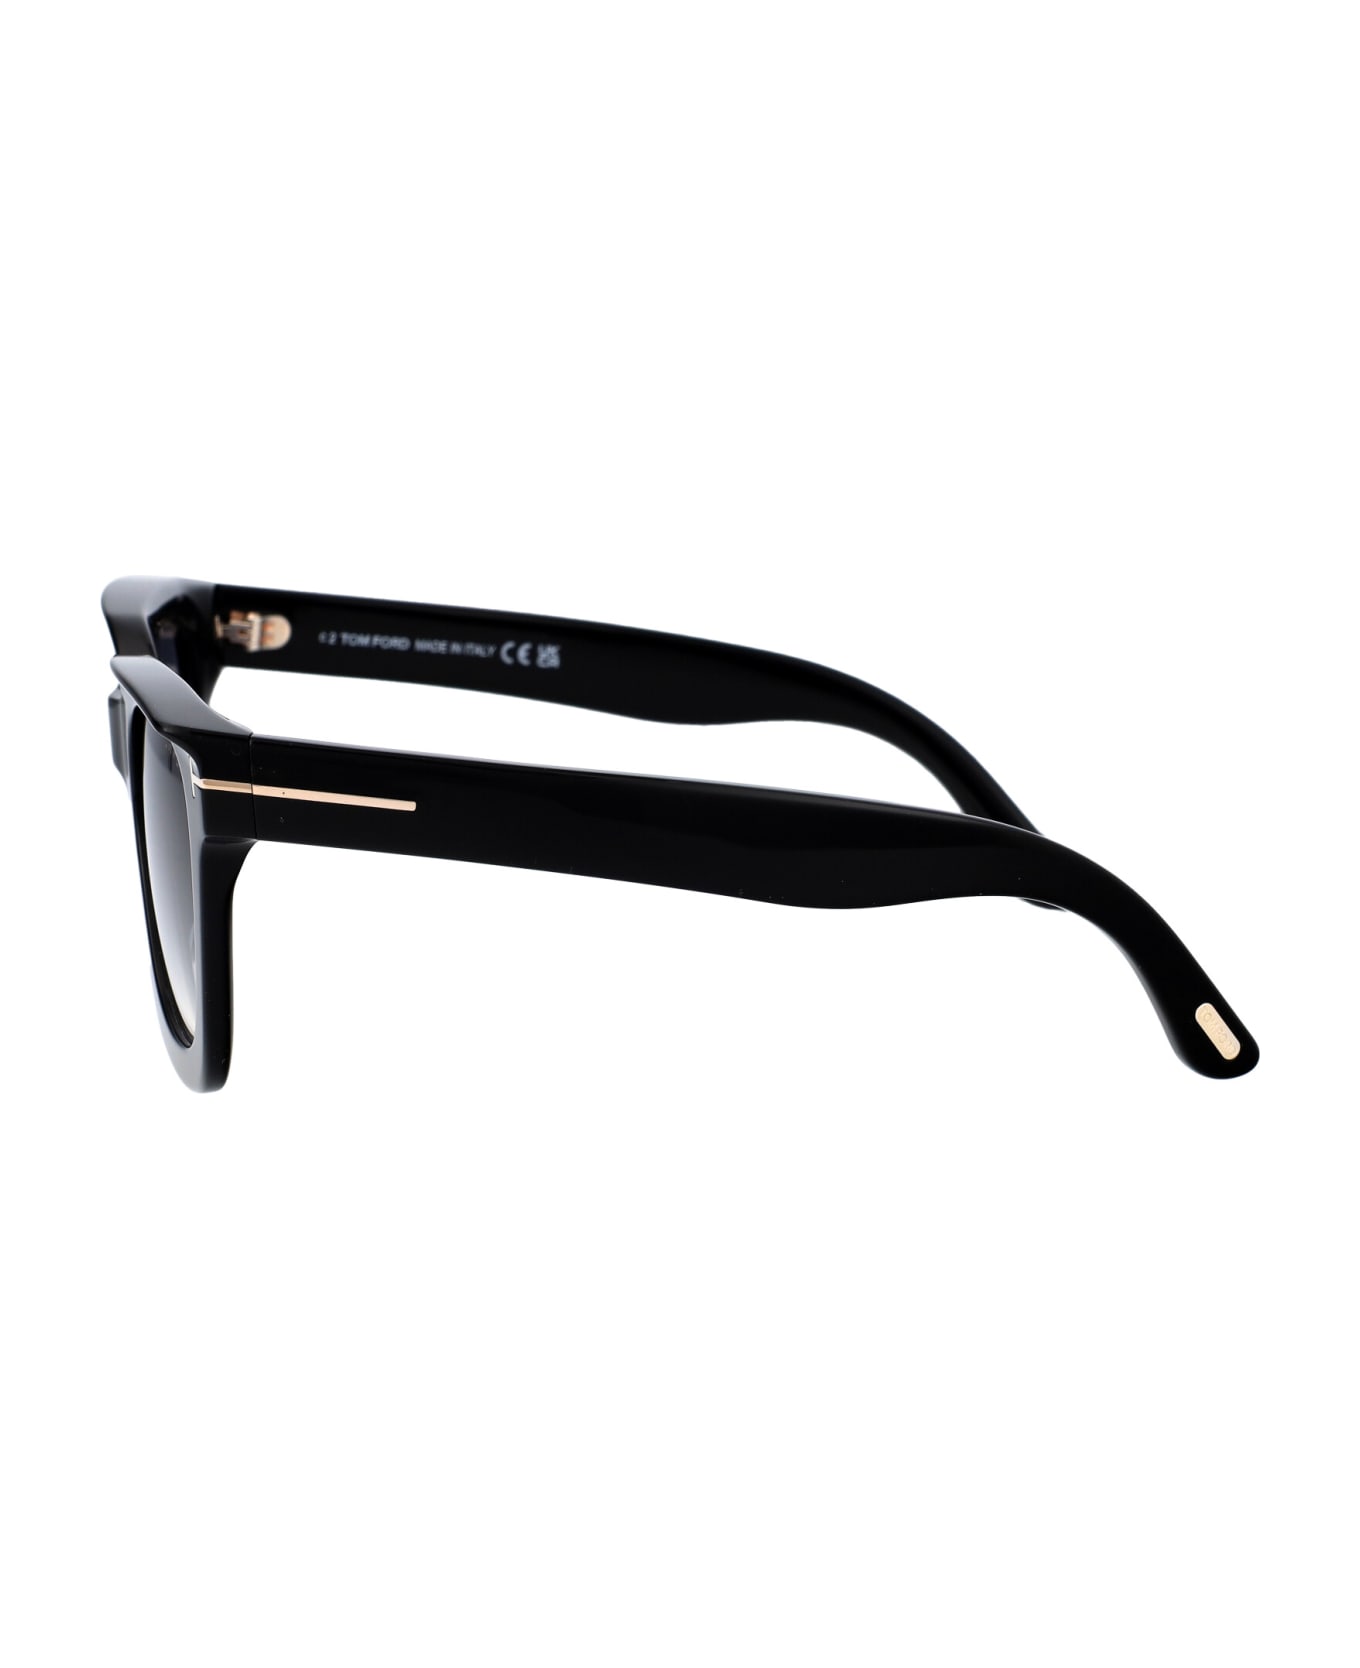 Tom Ford Eyewear Leigh-02 Sunglasses - 01B Nero Lucido / Fumo Grad サングラス